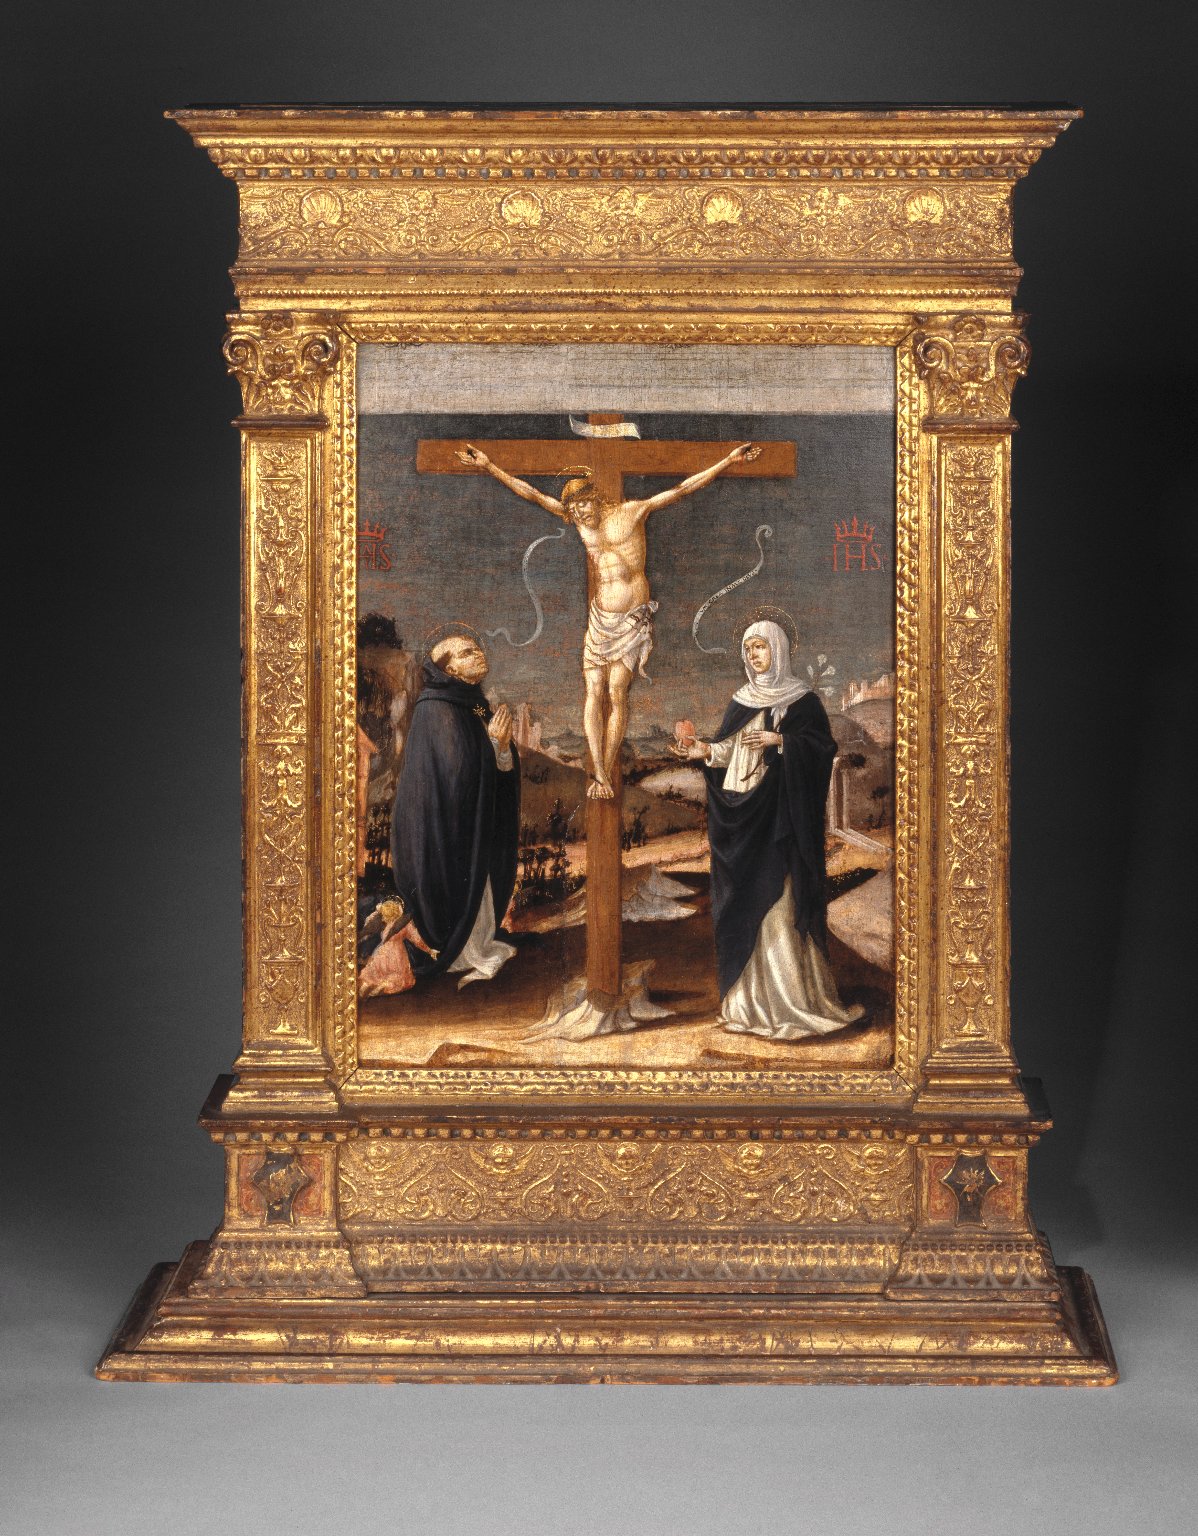 Christ on the Cross Adored by Saints Thomas Aquinas and Catherine of Siena (1490, Italy) by Lorenzo d'Alessandro da San Severino - Public Domain Catholic Painting